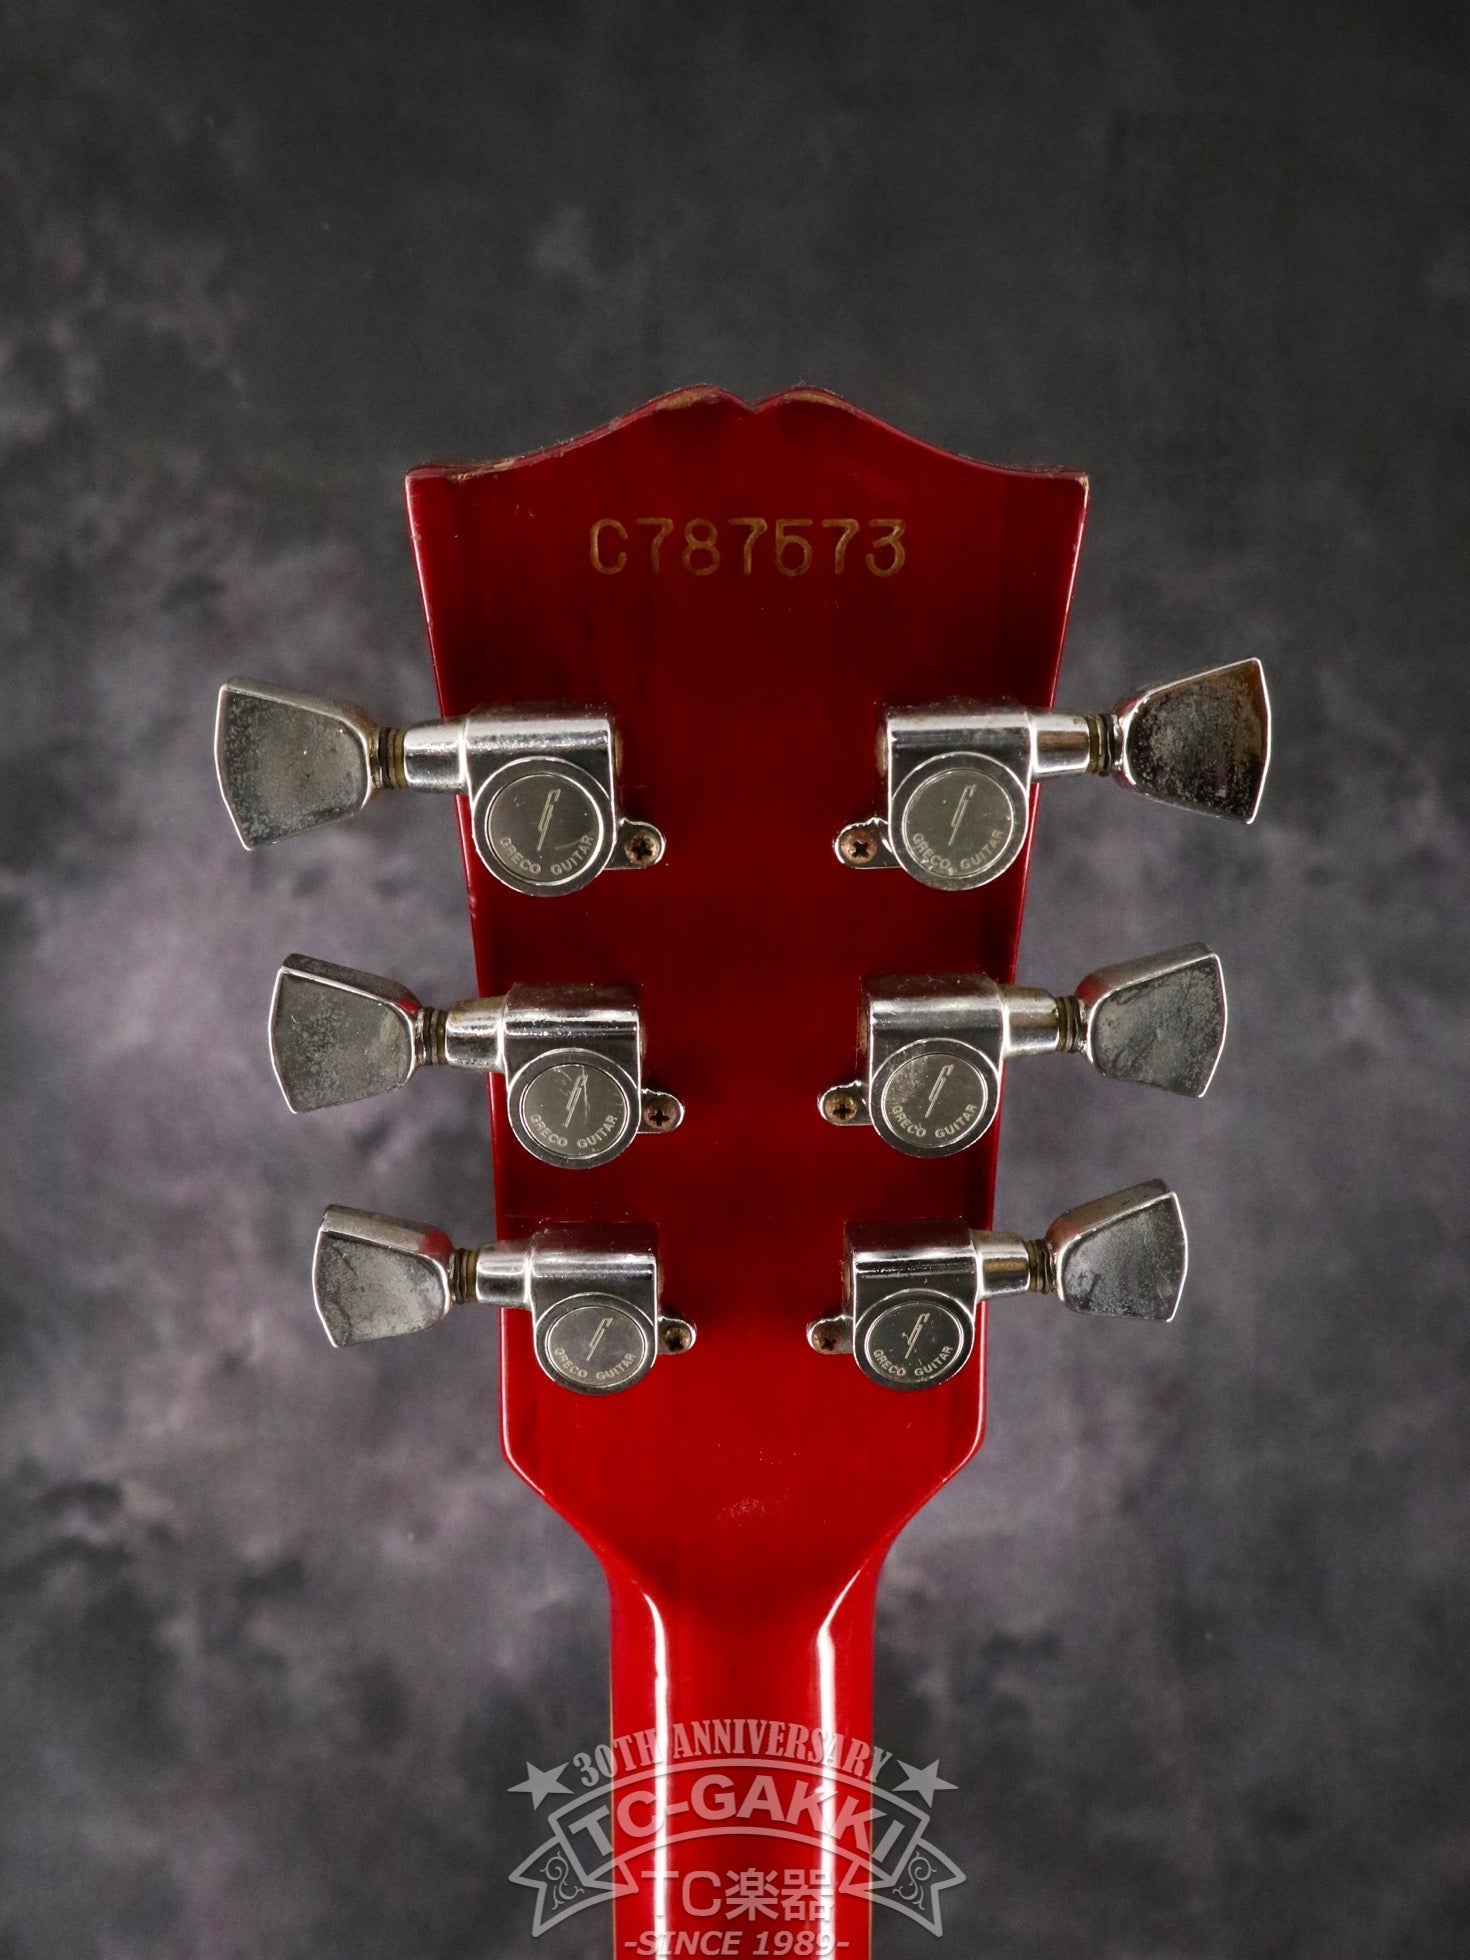 1978 Gibson EG500 - TC楽器 - TCGAKKI